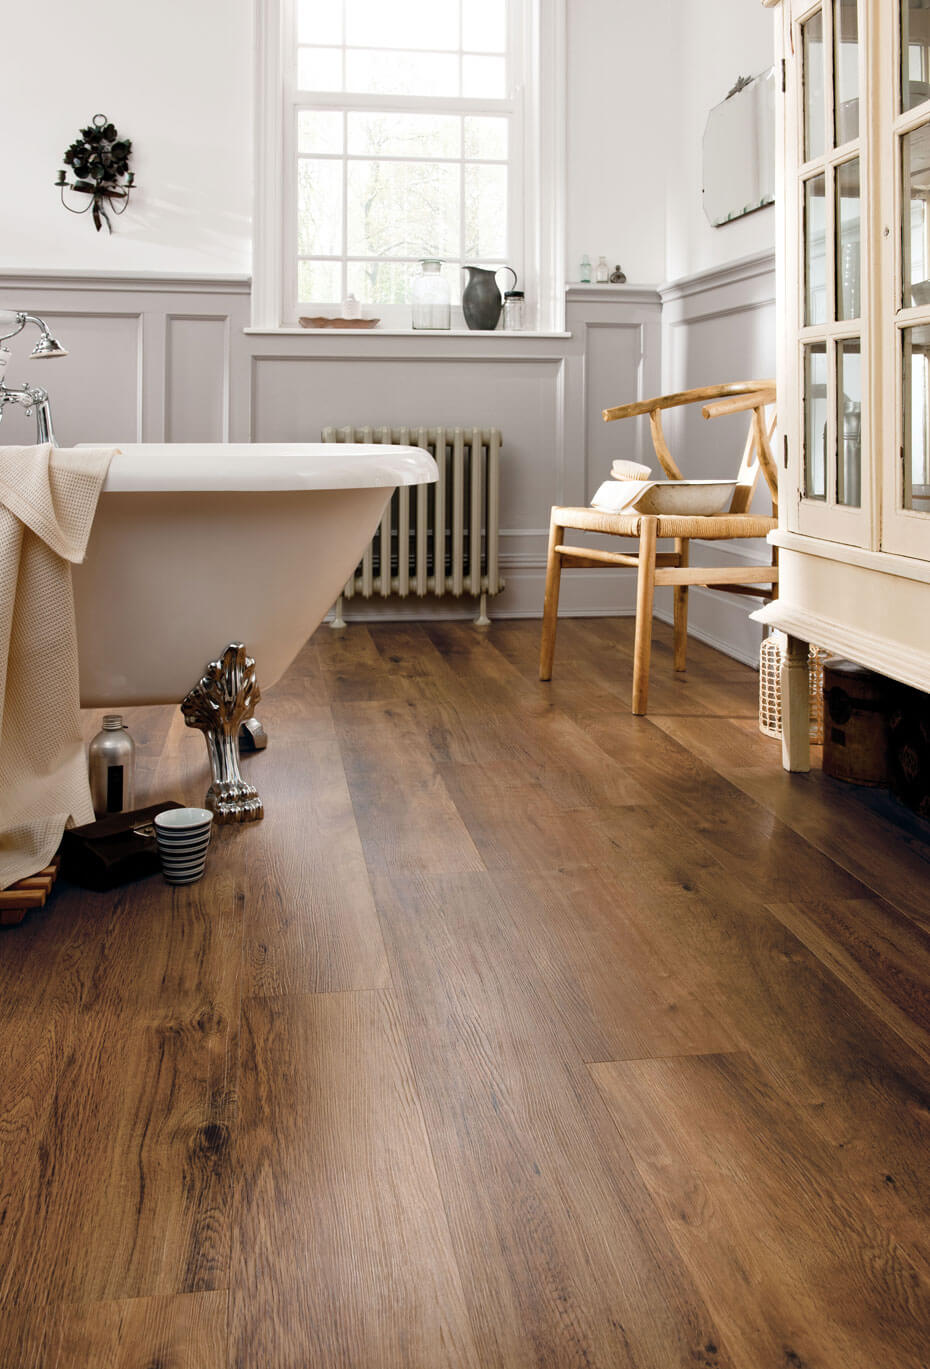 What Is Popular For Bathroom Flooring Best Home Design Ideas 5994